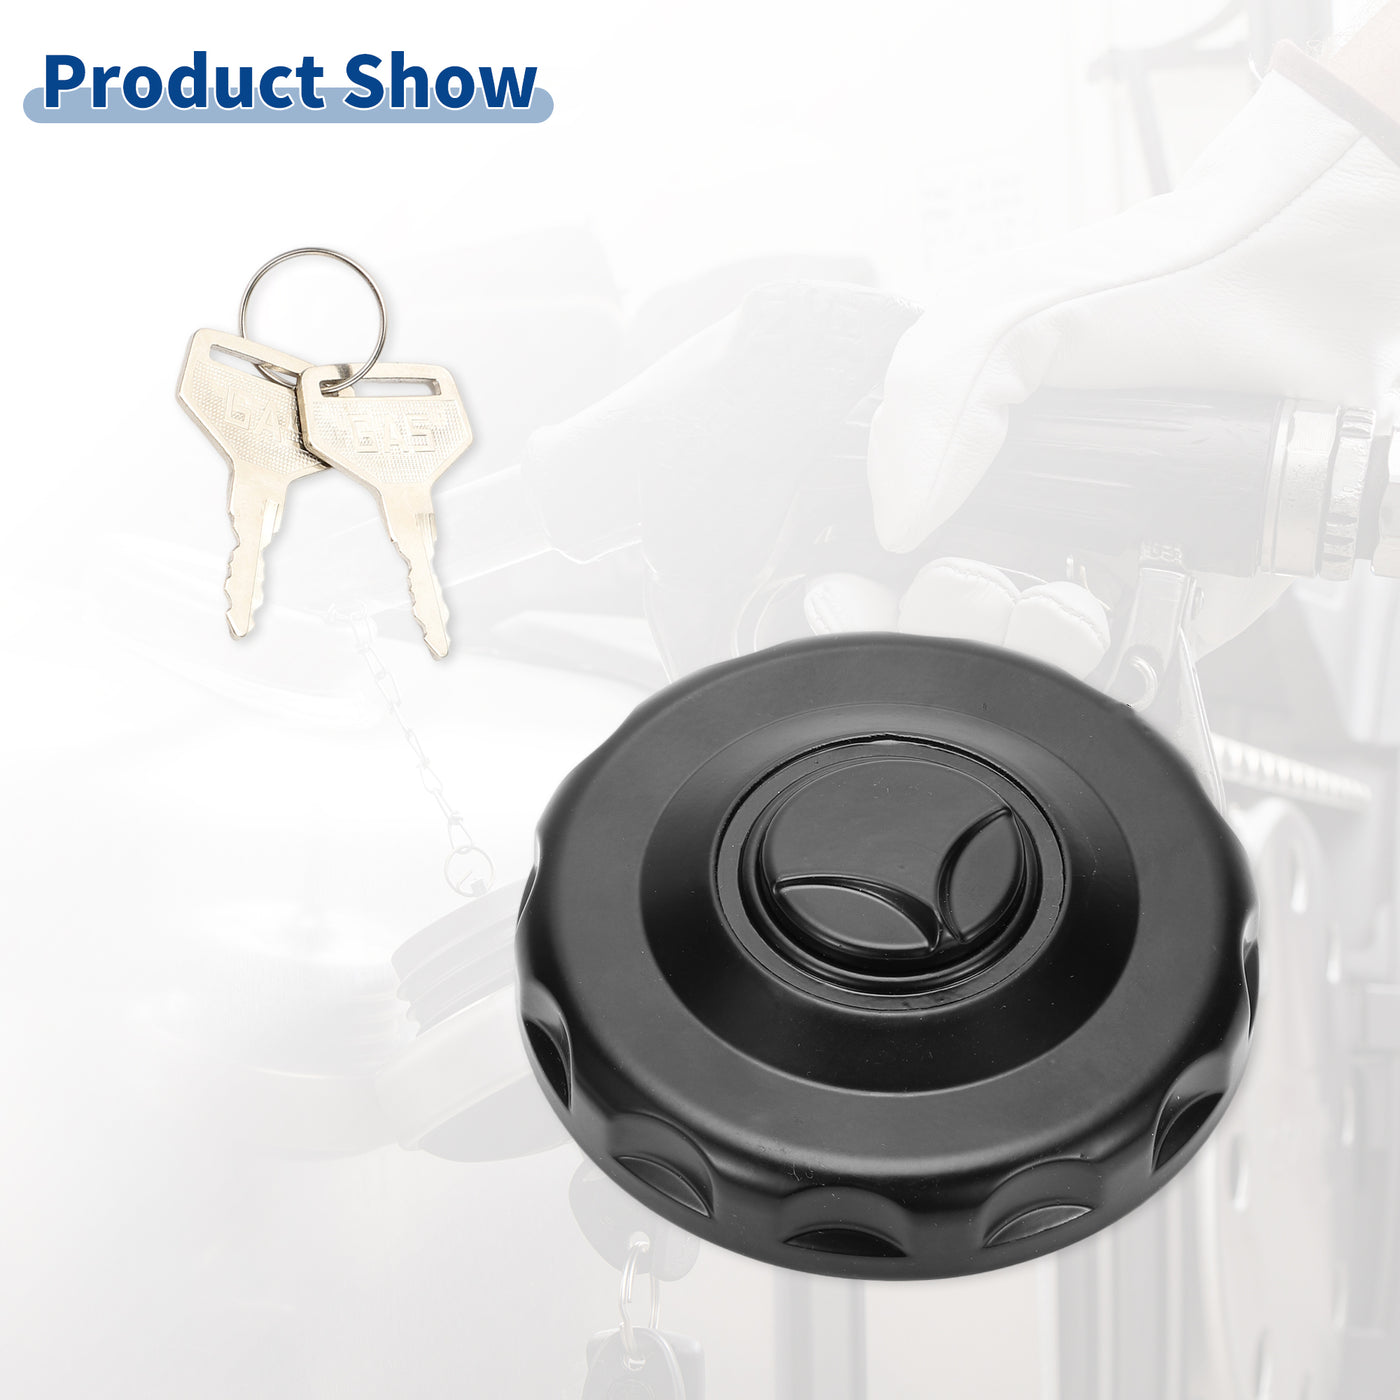 ACROPIX Plastic Locking Gas Cap Lock Fuel Tank Cap Black Fit for Mercedes Benz with Keys No.0004700305 - Pack of 3